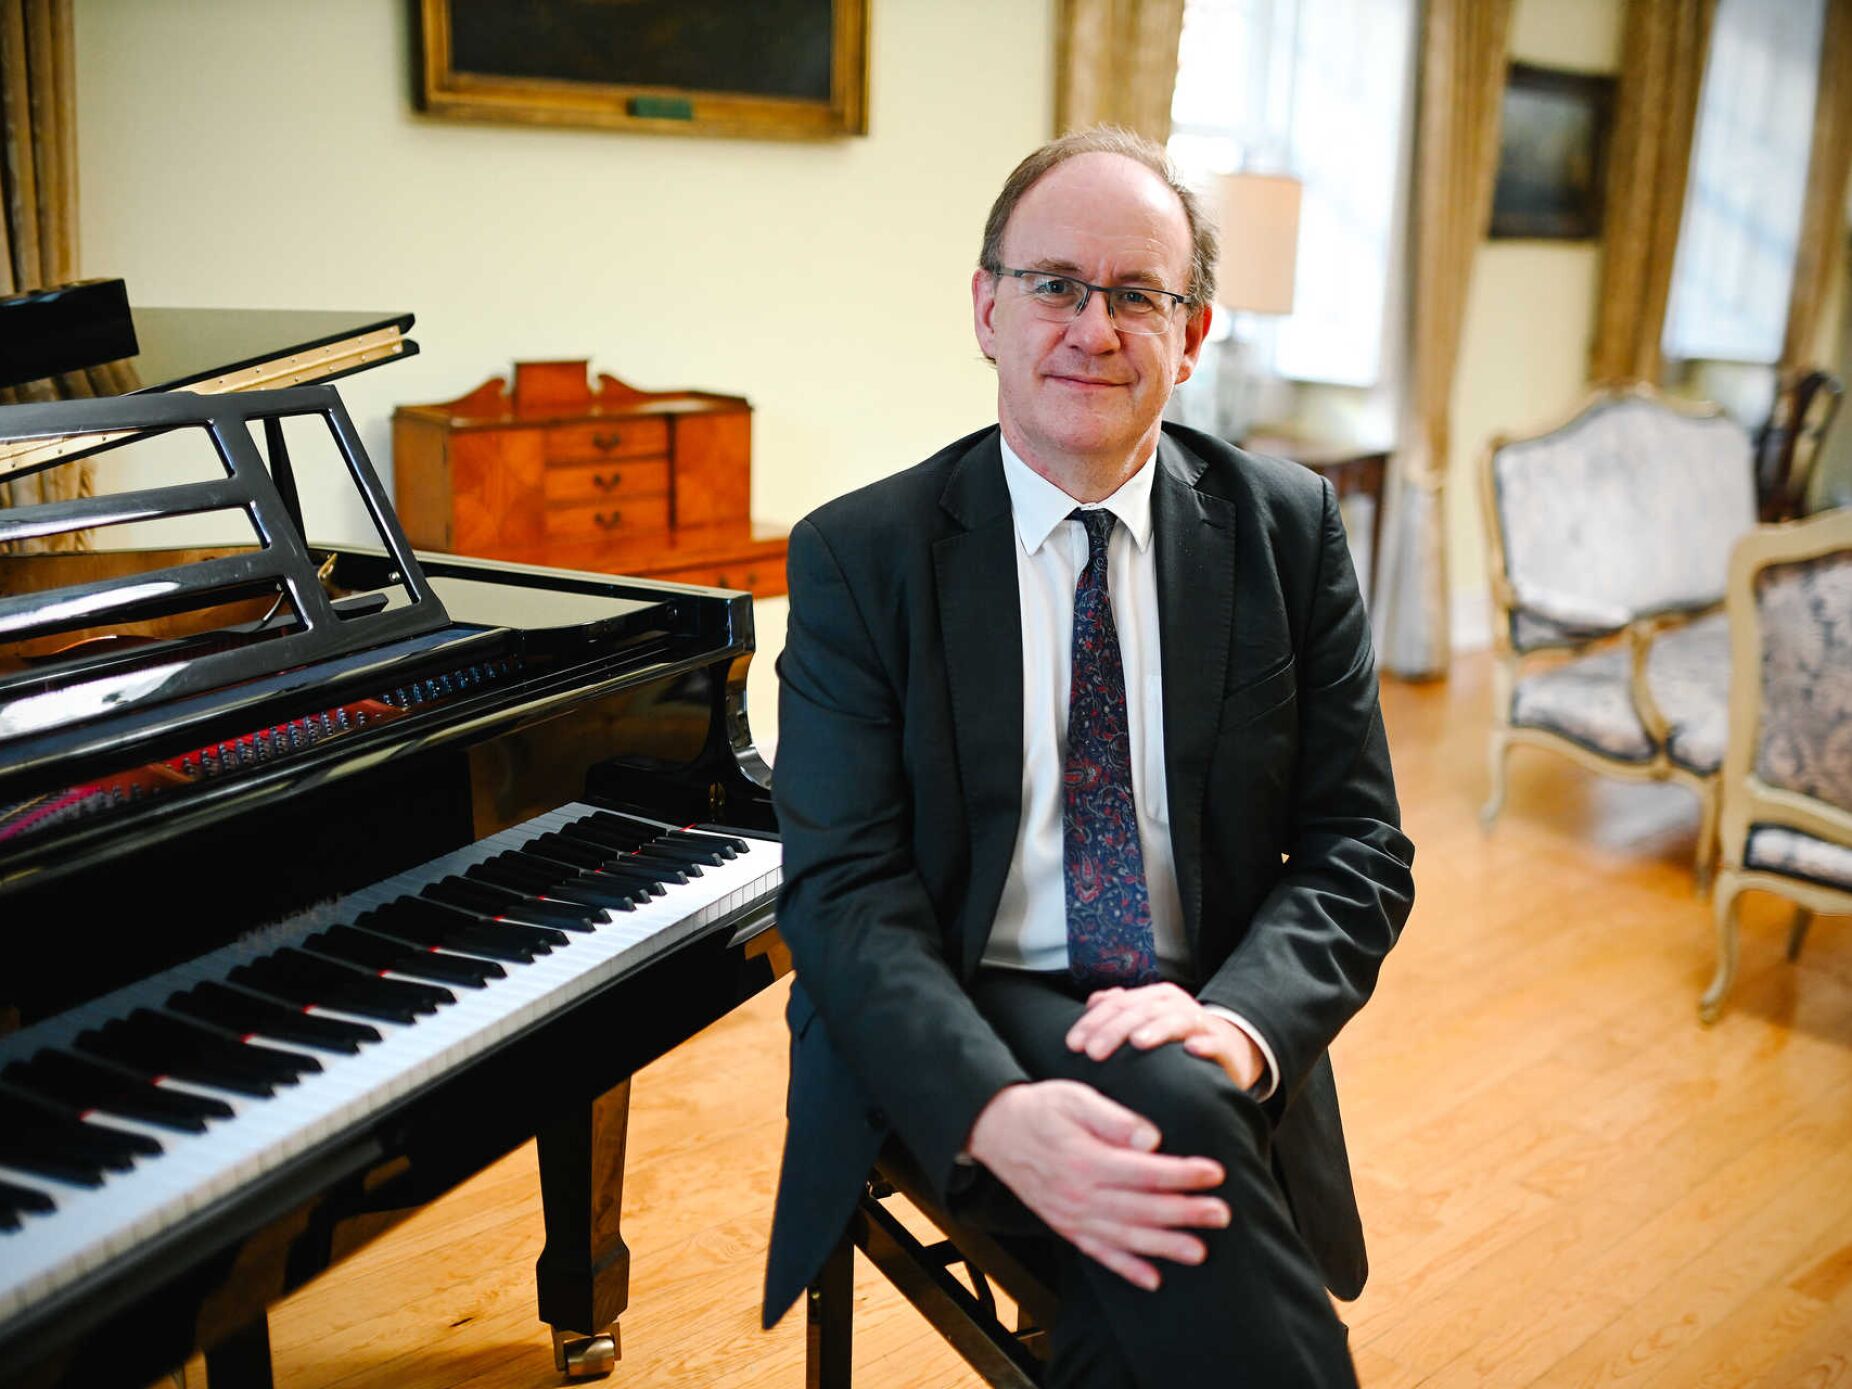 O embaixador que comoveu Portugal na pandemia ao tocar a Grândola ao piano